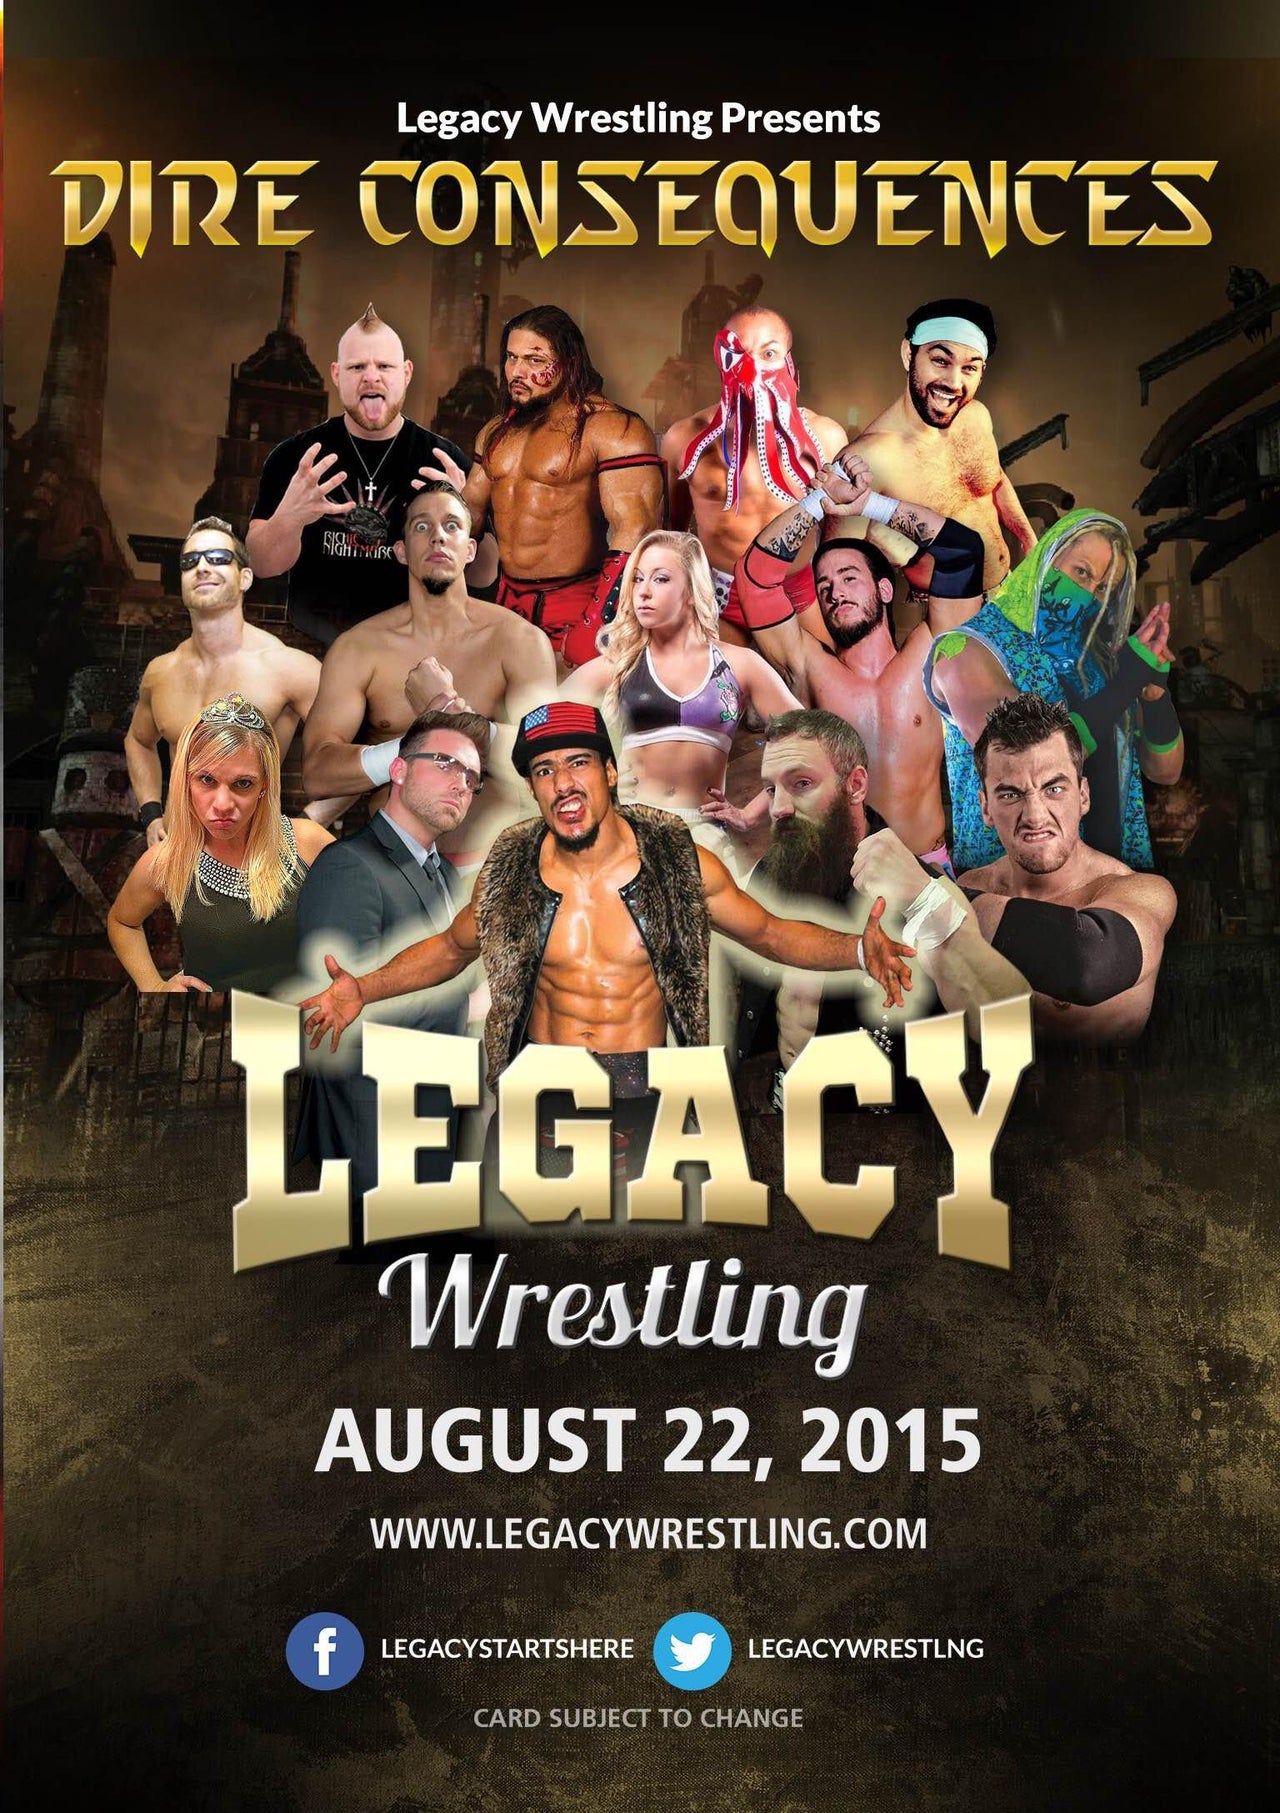 Buy Now – Legacy Wrestling "Dire Consequences" DVD (08/22/2015) – Wrestler & Wrestling Merch – Bottom Line